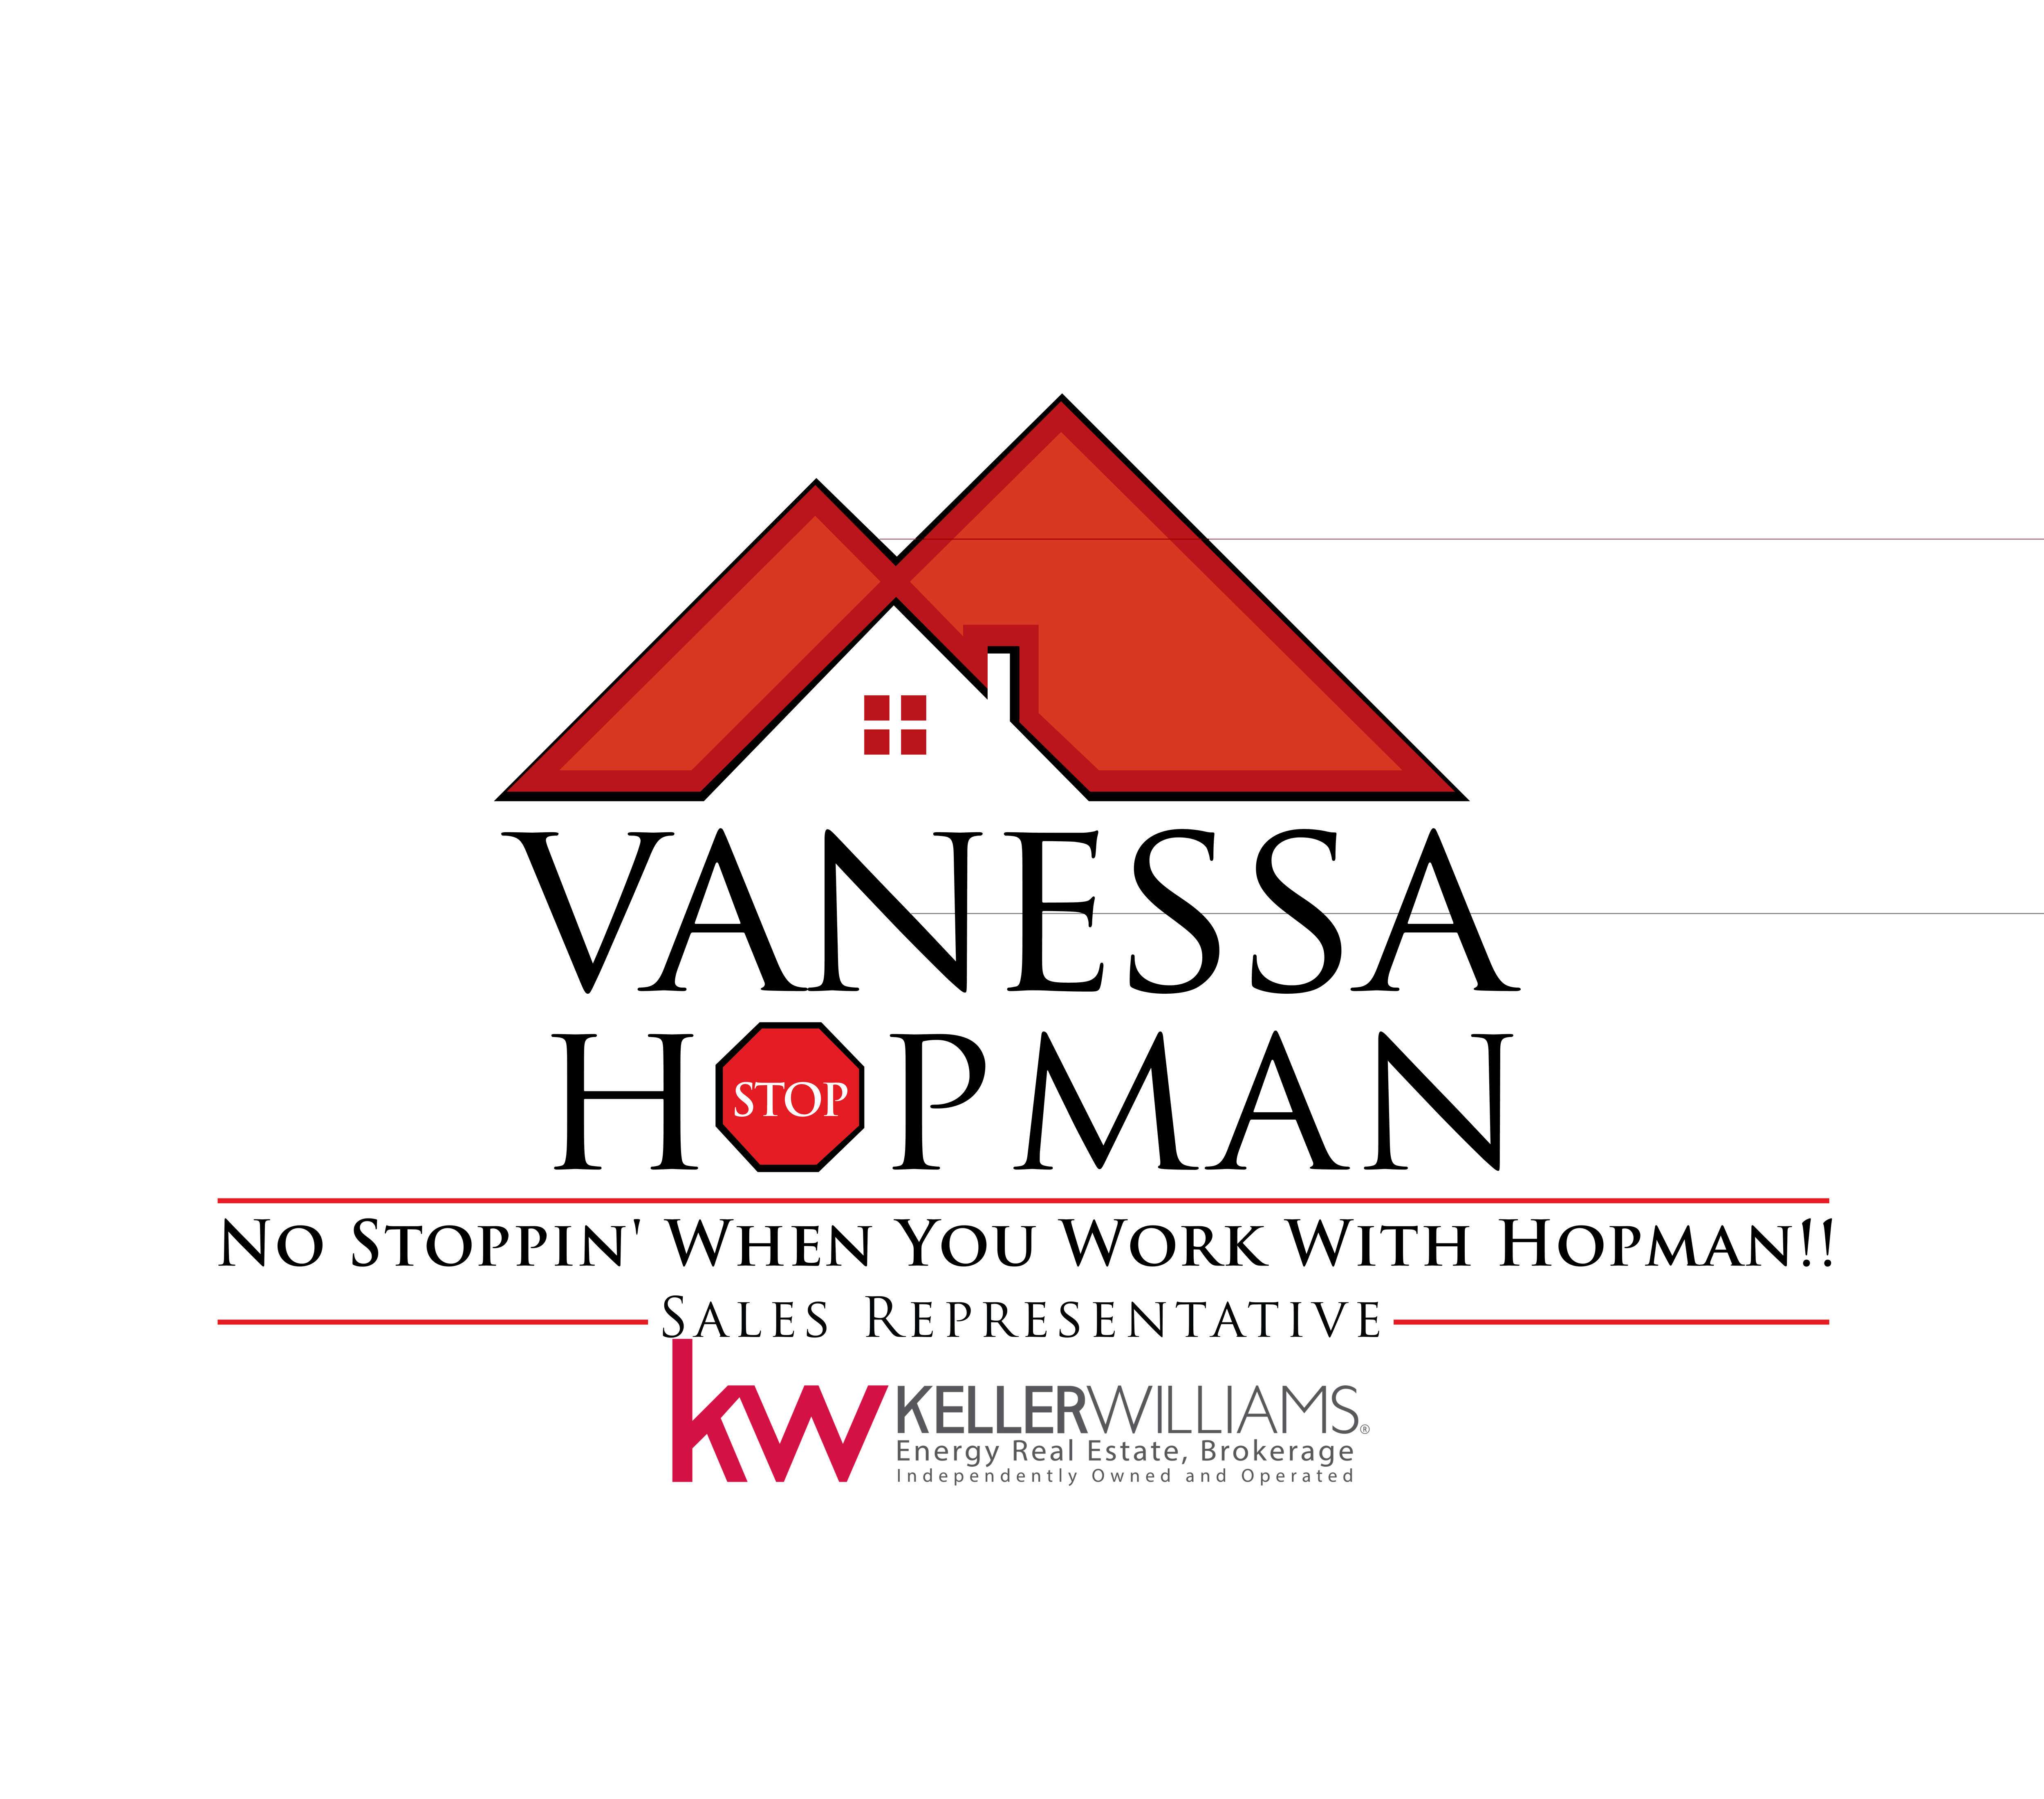 Vanessa Hopman- Keller Williams Energy Real Estate